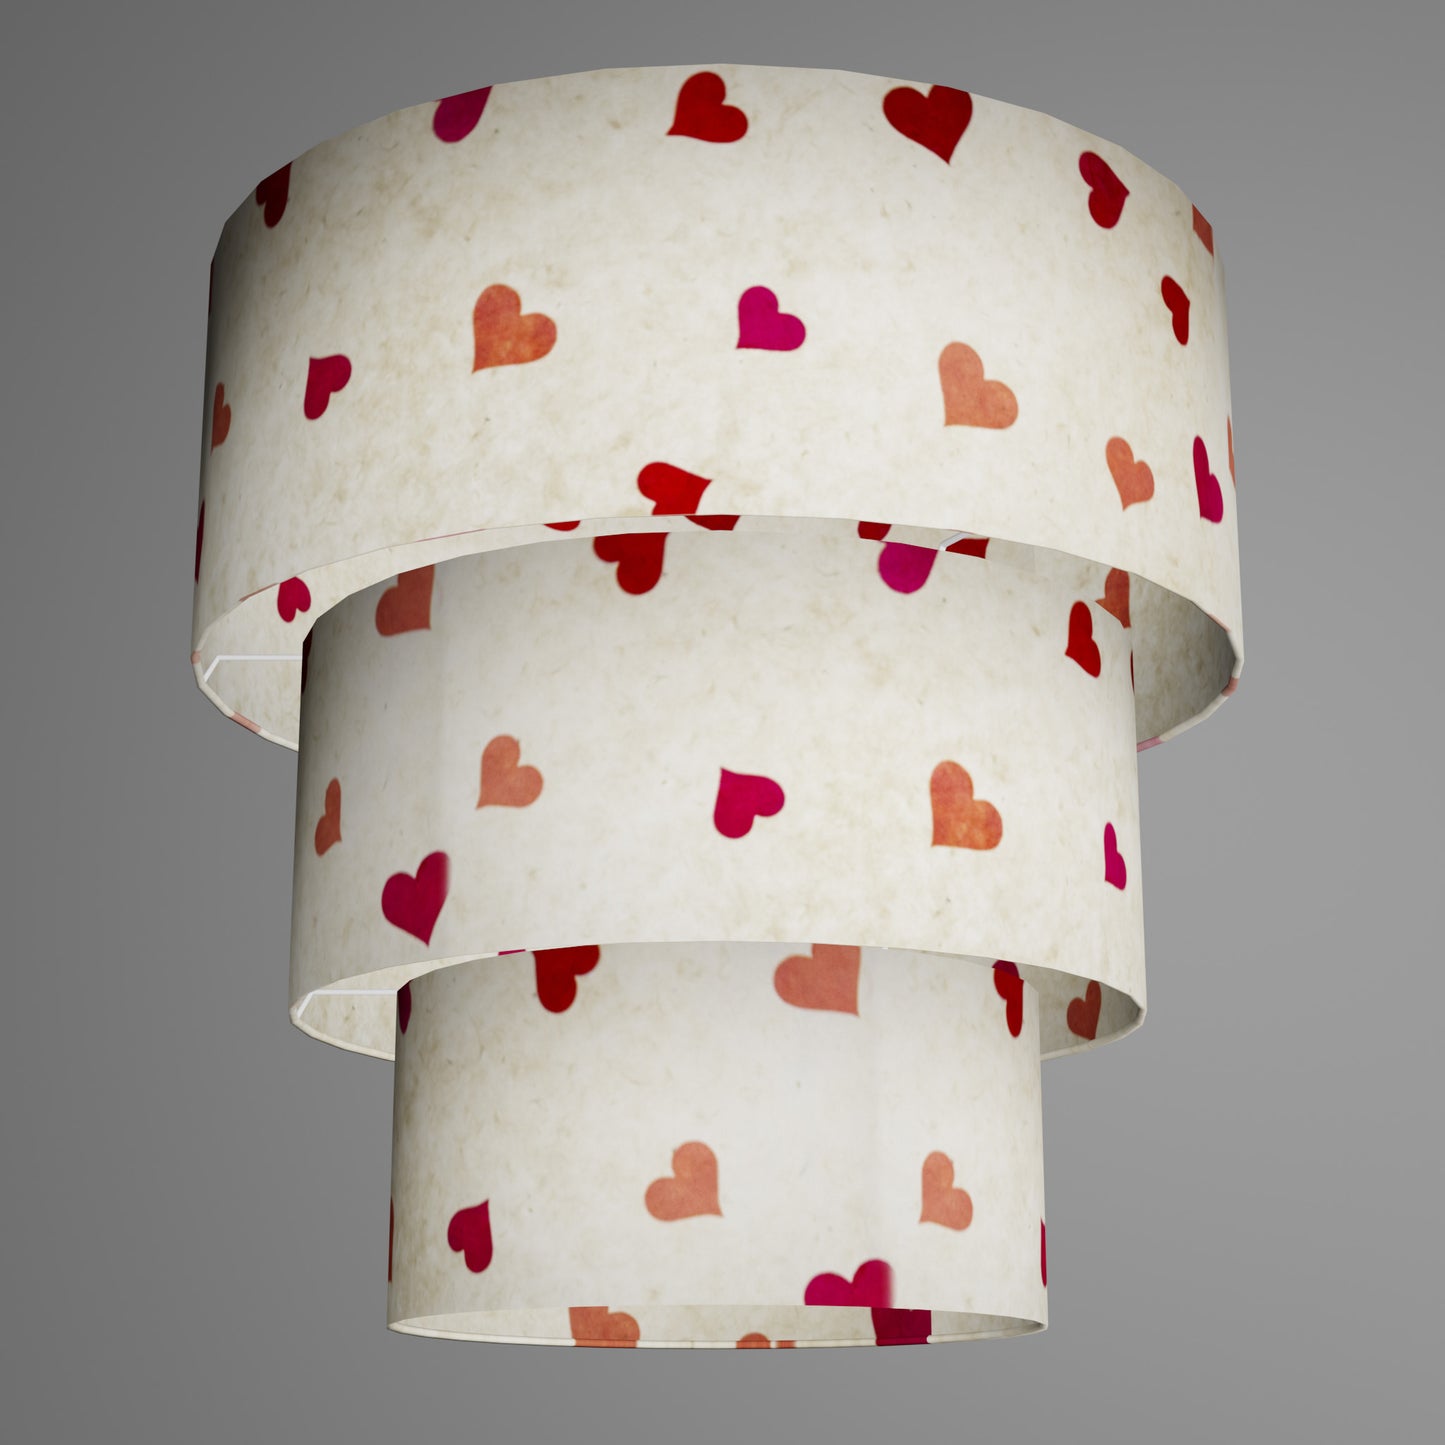 3 Tier Lamp Shade - P82 - Hearts on Lokta Paper, 50cm x 20cm, 40cm x 17.5cm & 30cm x 15cm